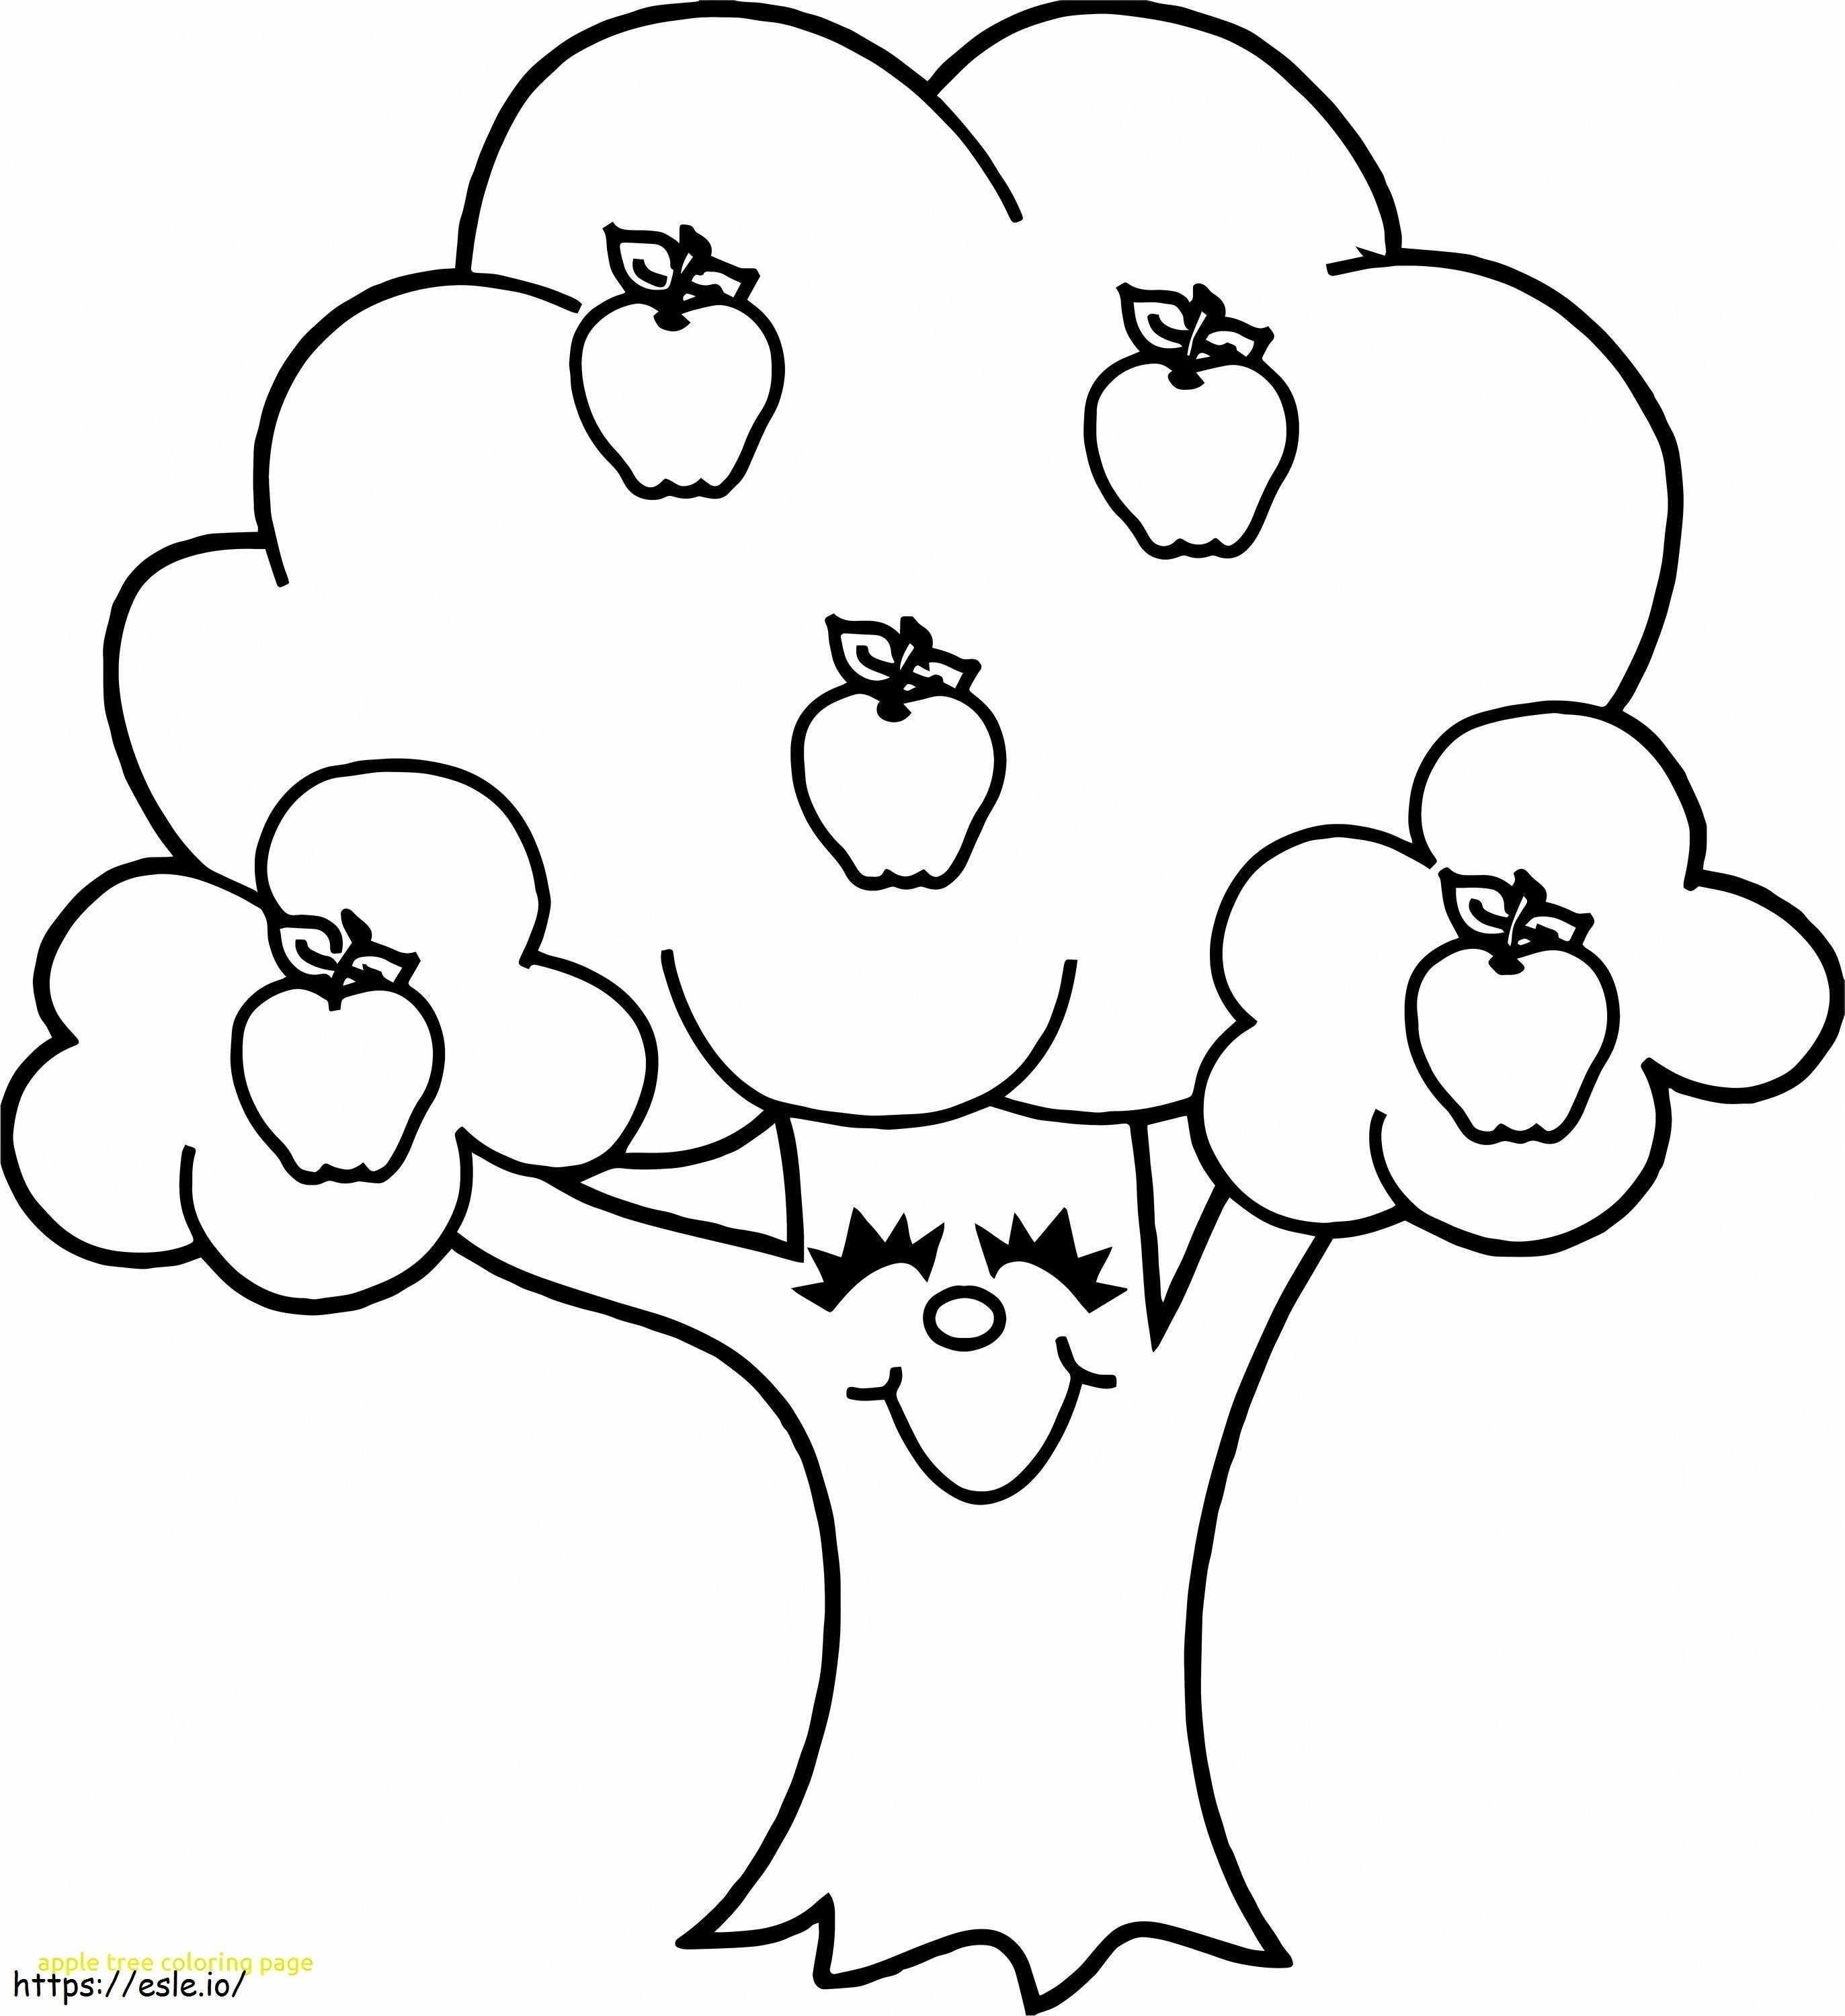 1544147602 Pohon Apel Lengkap Dengan Lucu Gambar Mewarnai